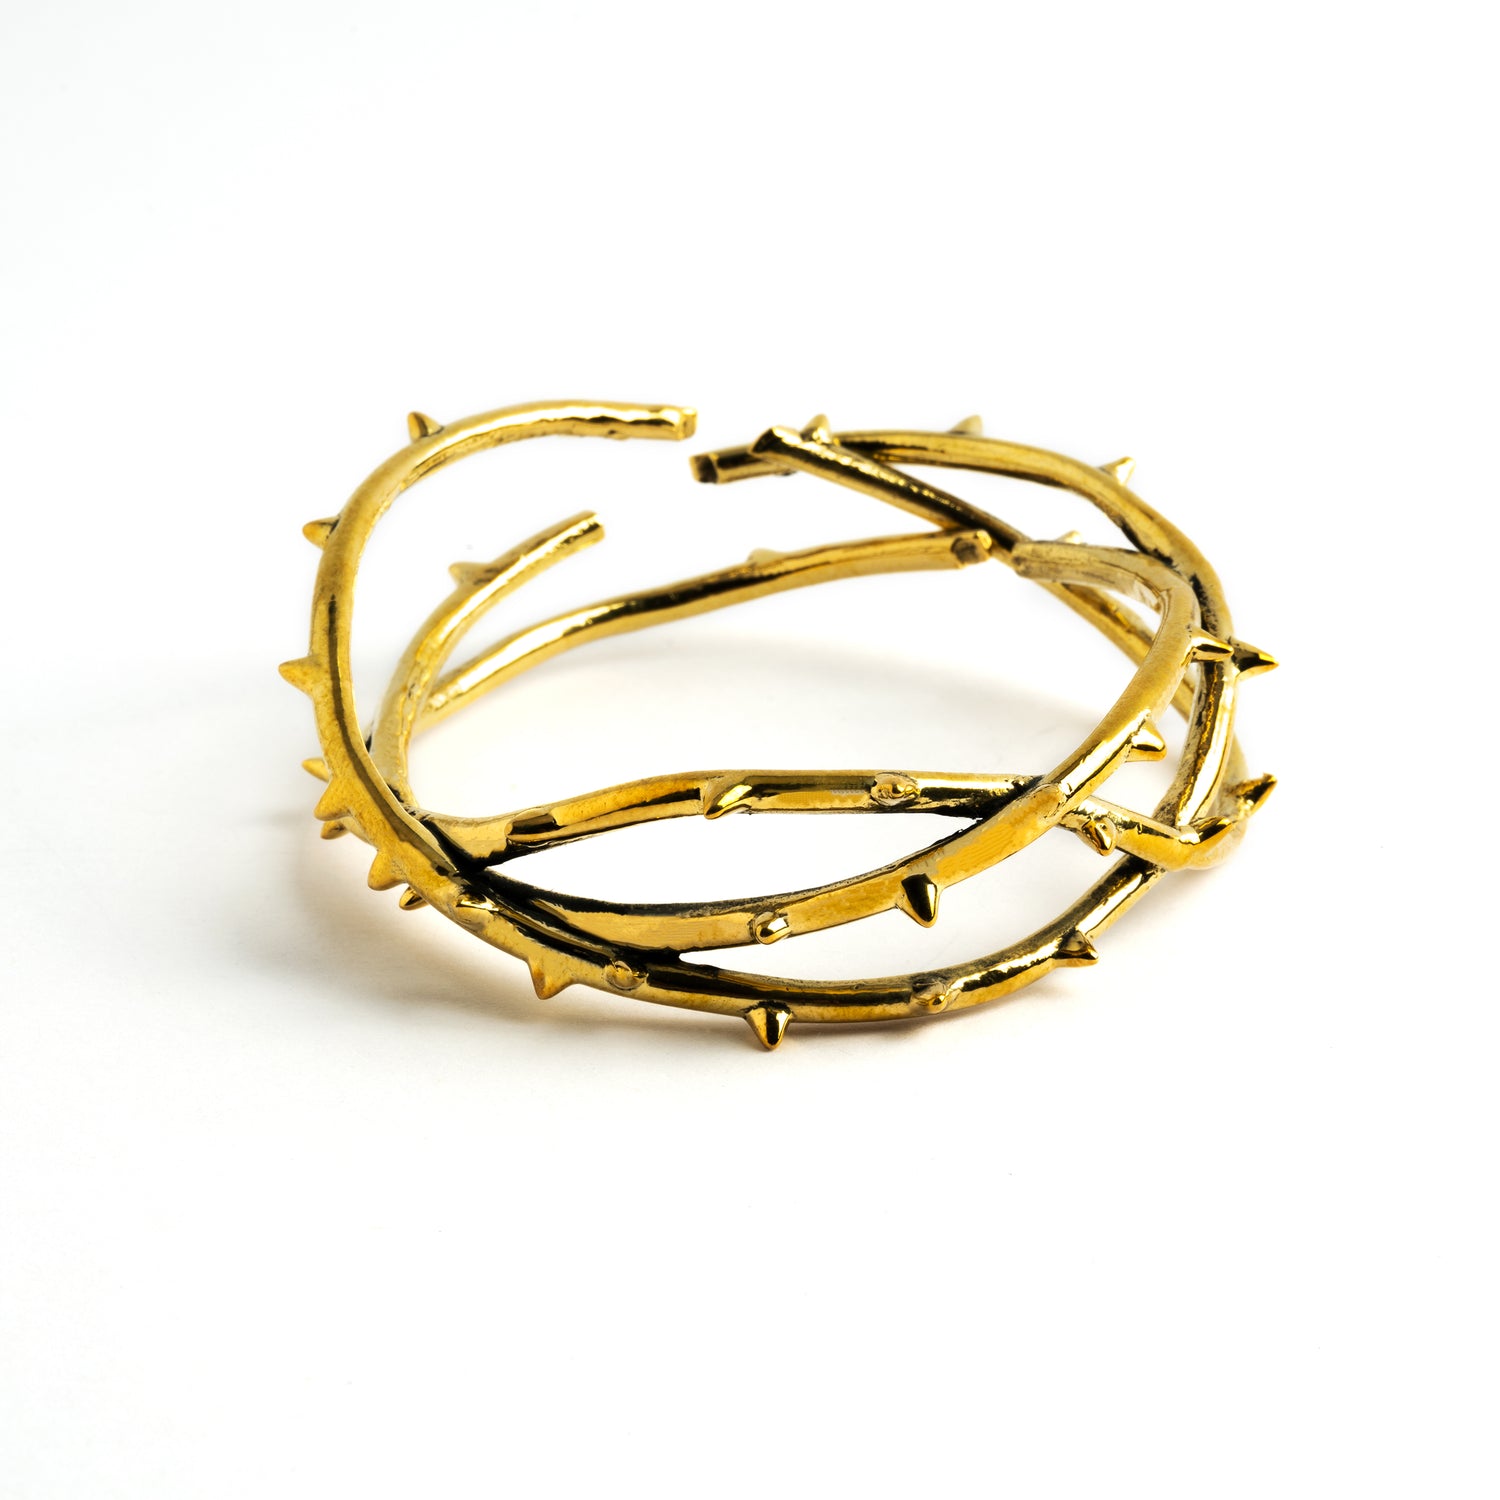 Golden-thorn-cuff-bracelet_1